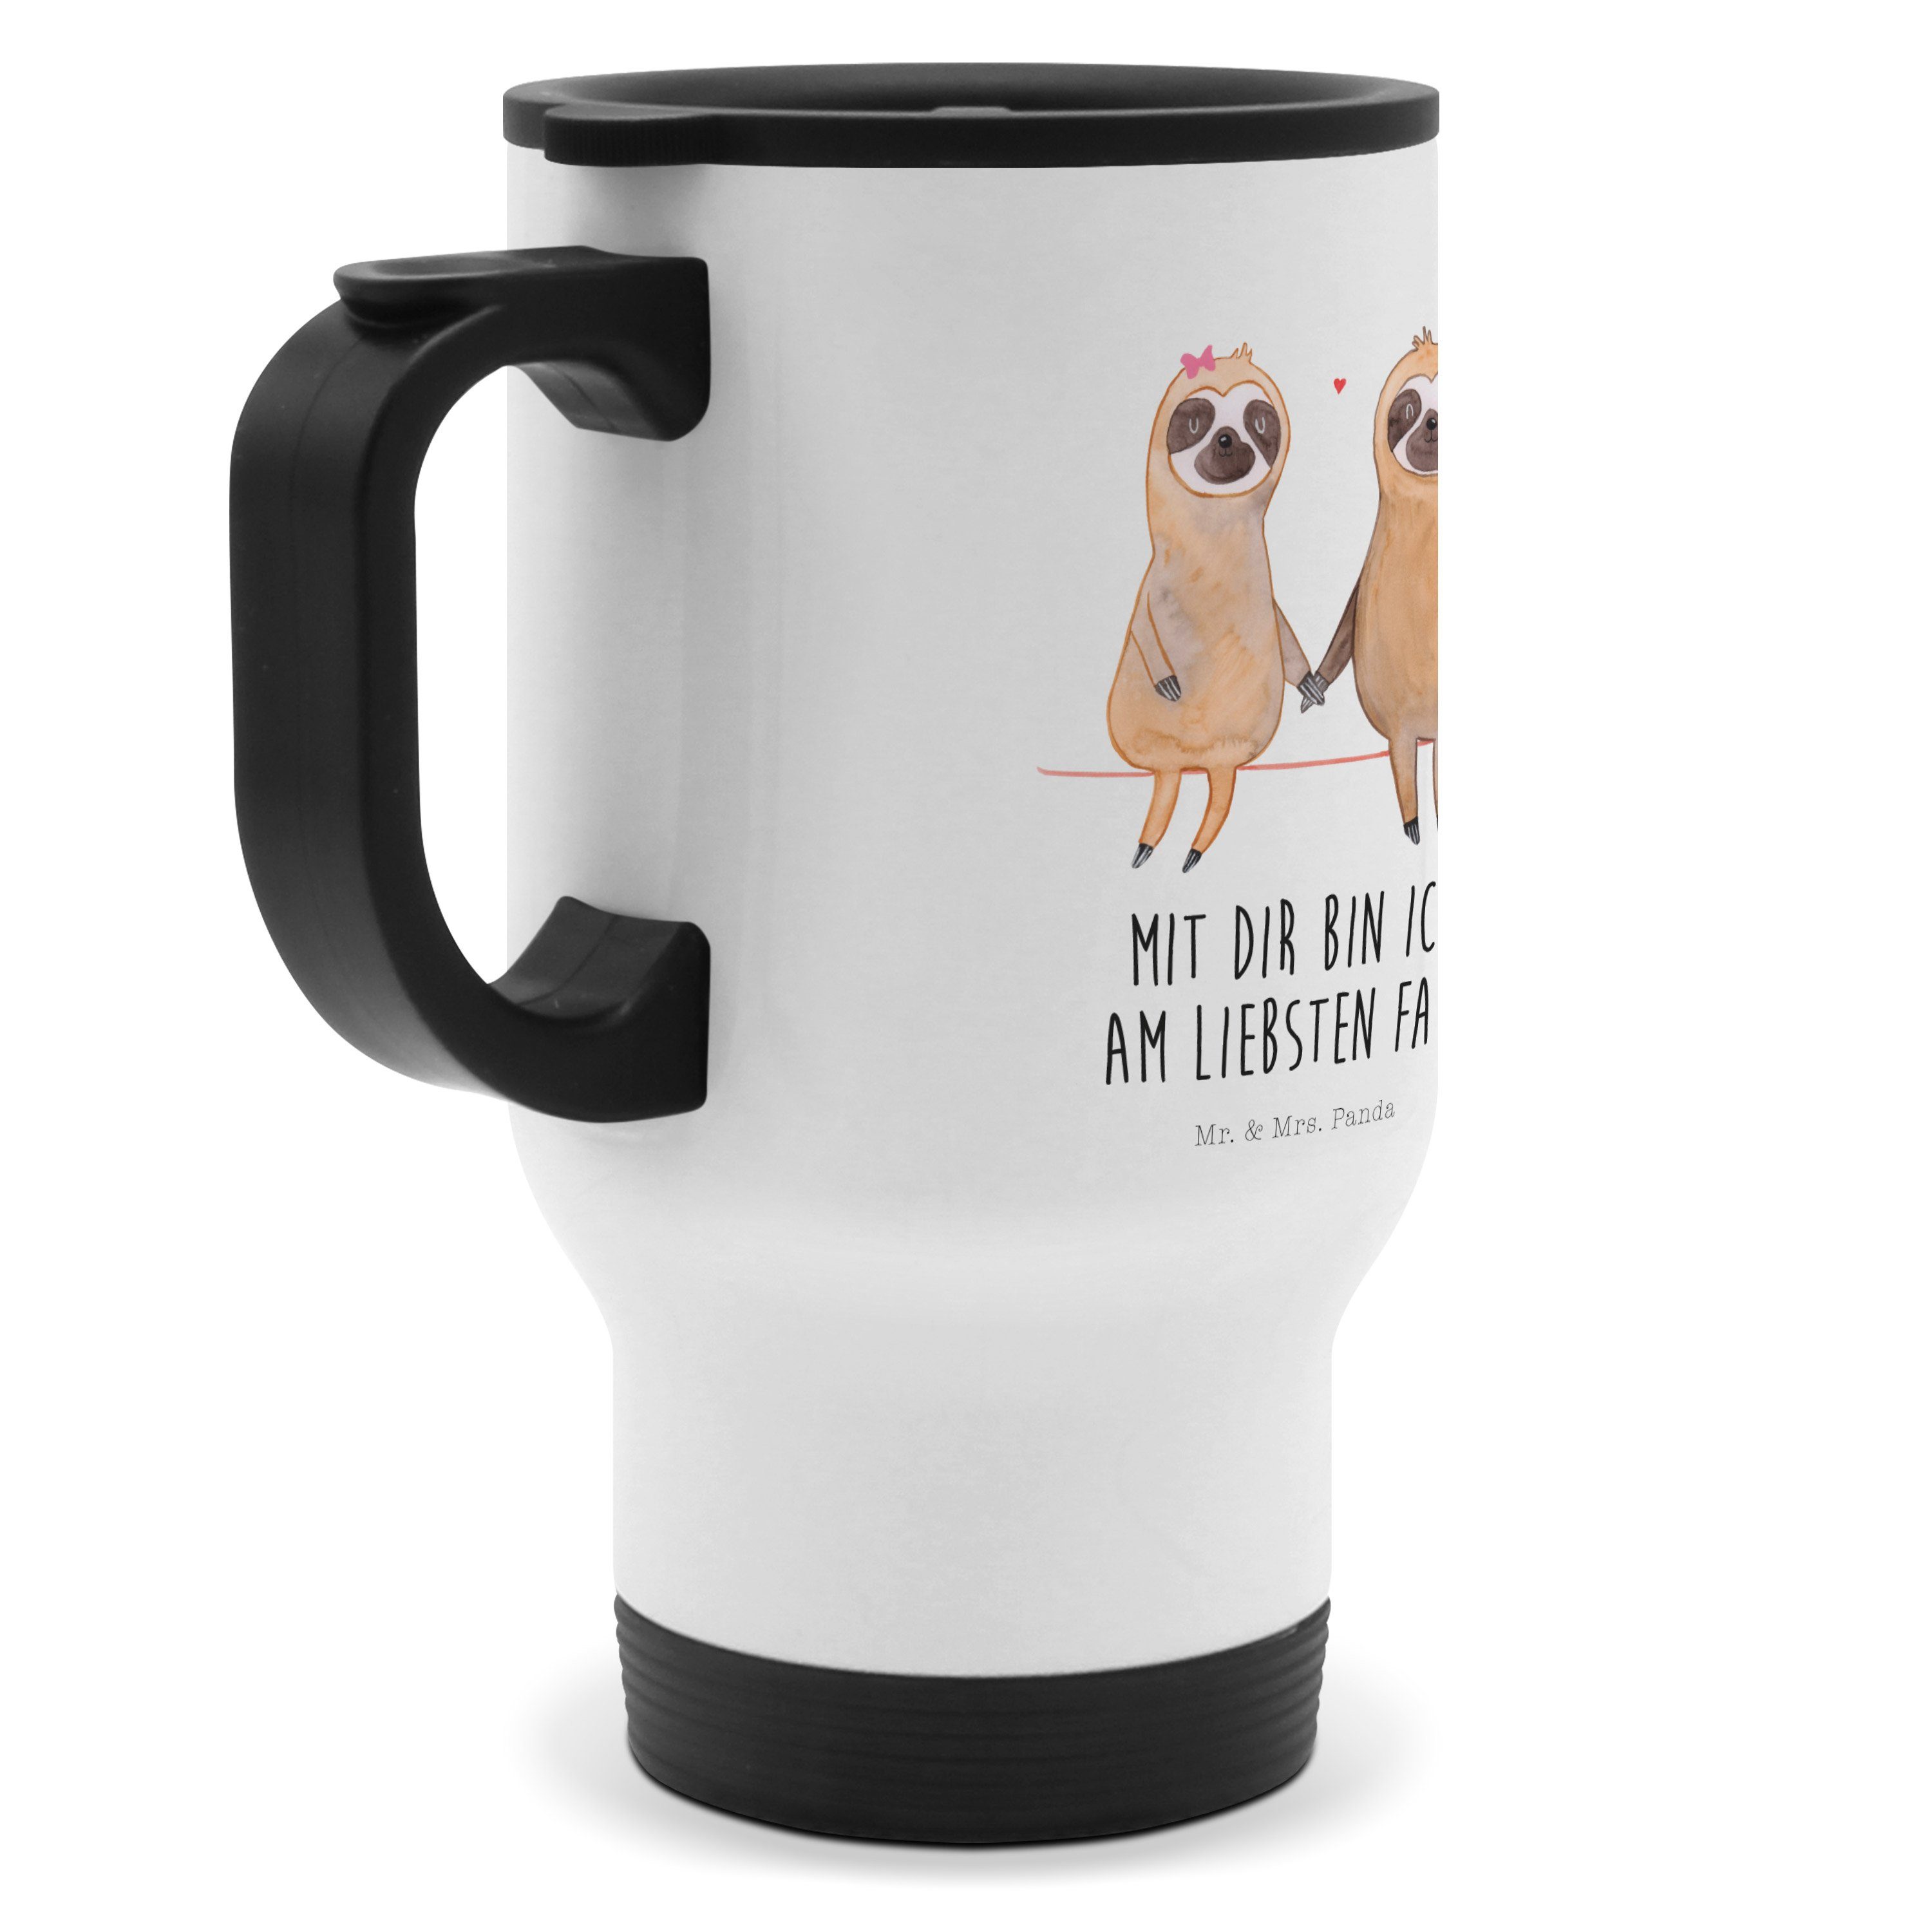 Mr. & Mrs. Panda Thermobecher Kaffeetasse Weiß Edelstahl - - Liebe, Pärchen Faultier Mitnehmen, zum Geschenk